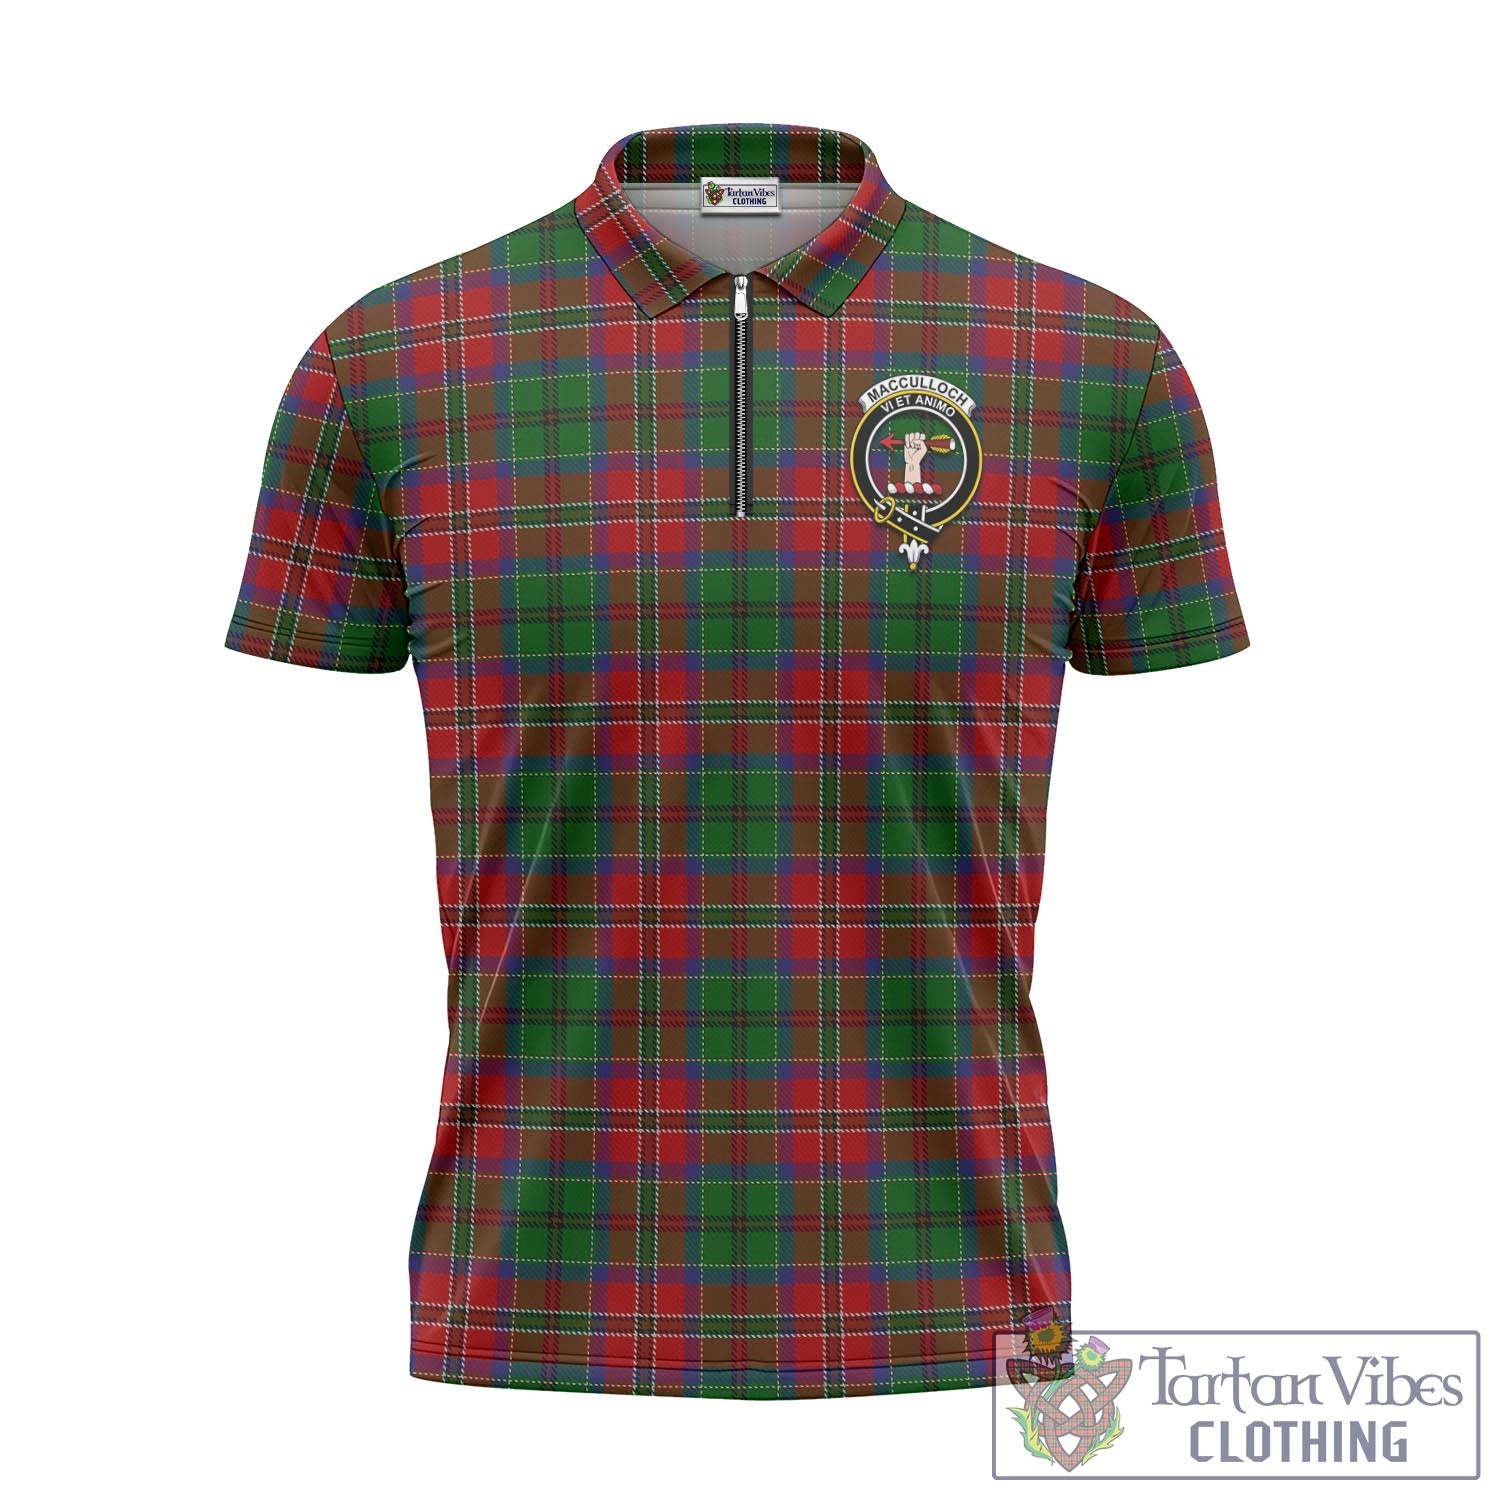 Tartan Vibes Clothing MacCulloch Tartan Zipper Polo Shirt with Family Crest